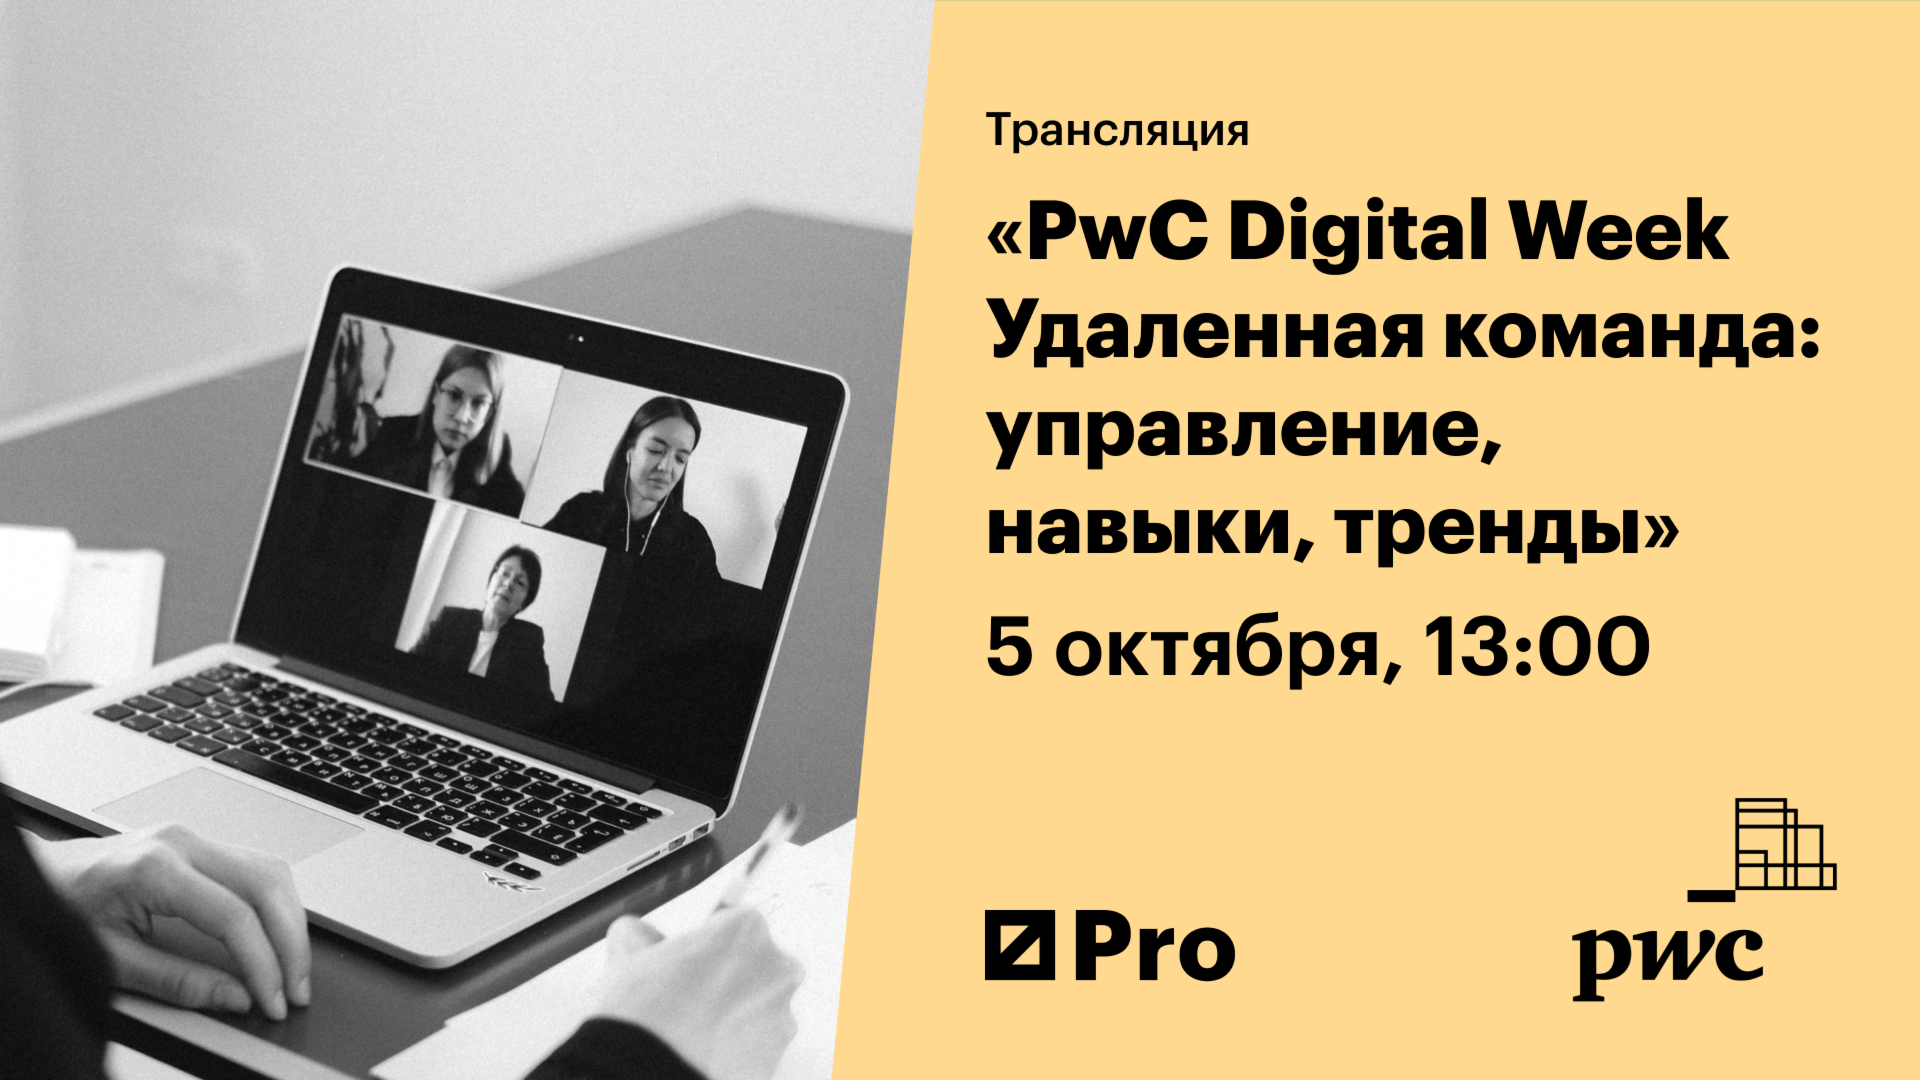 PwC Digital Week. Удаленная команда: управление, навыки, тренды